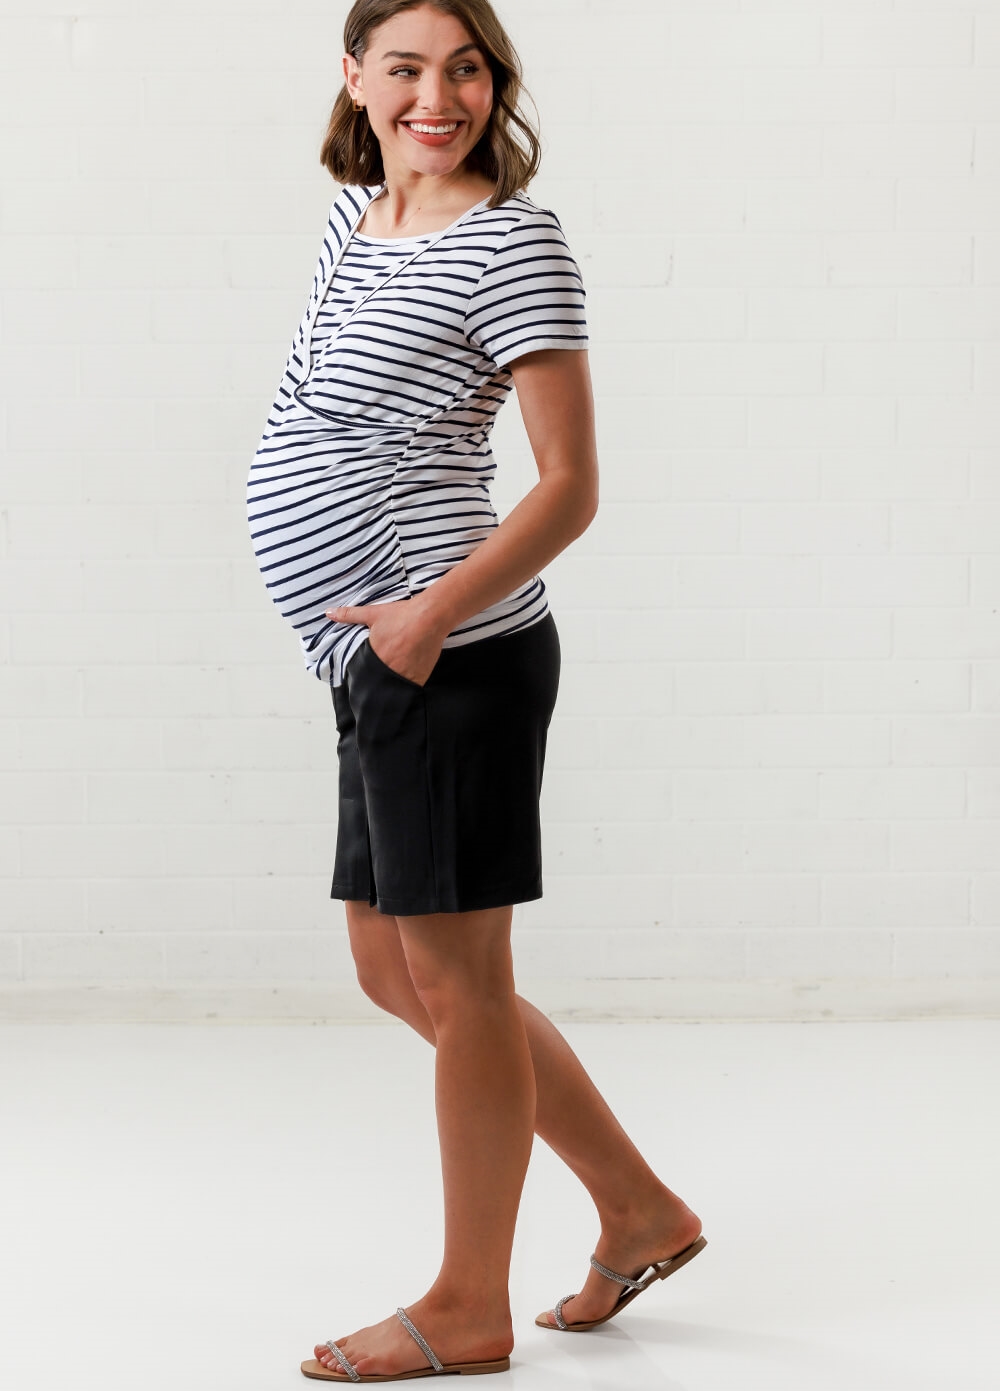 Lait & Co - Lunette Maternity Shorts in Black